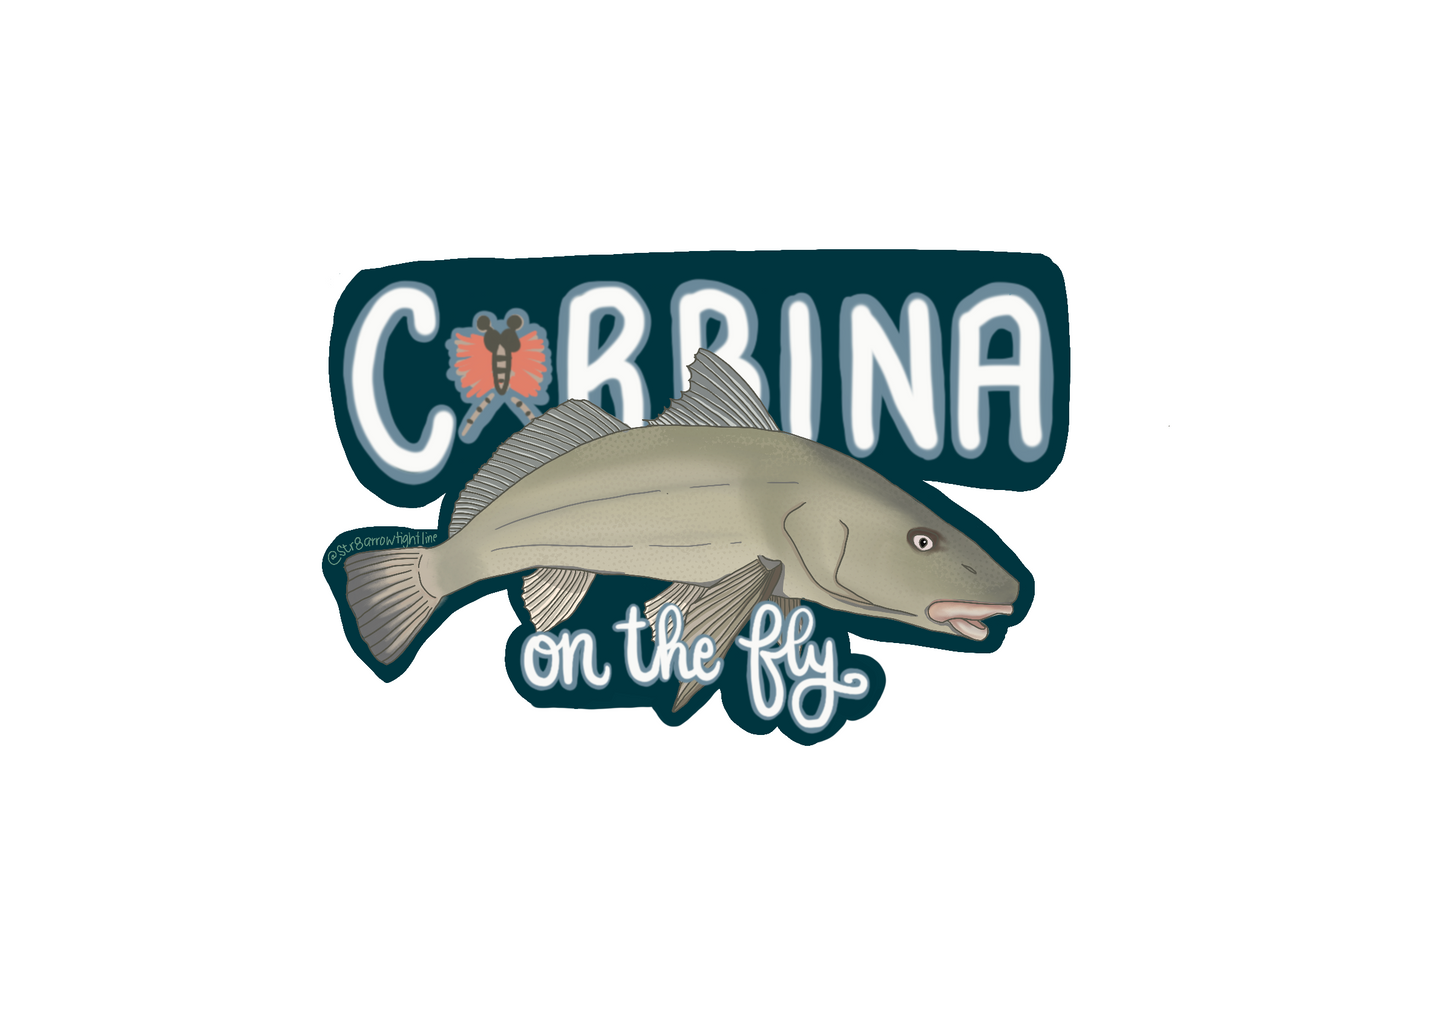 Corbina on the fly Stickers